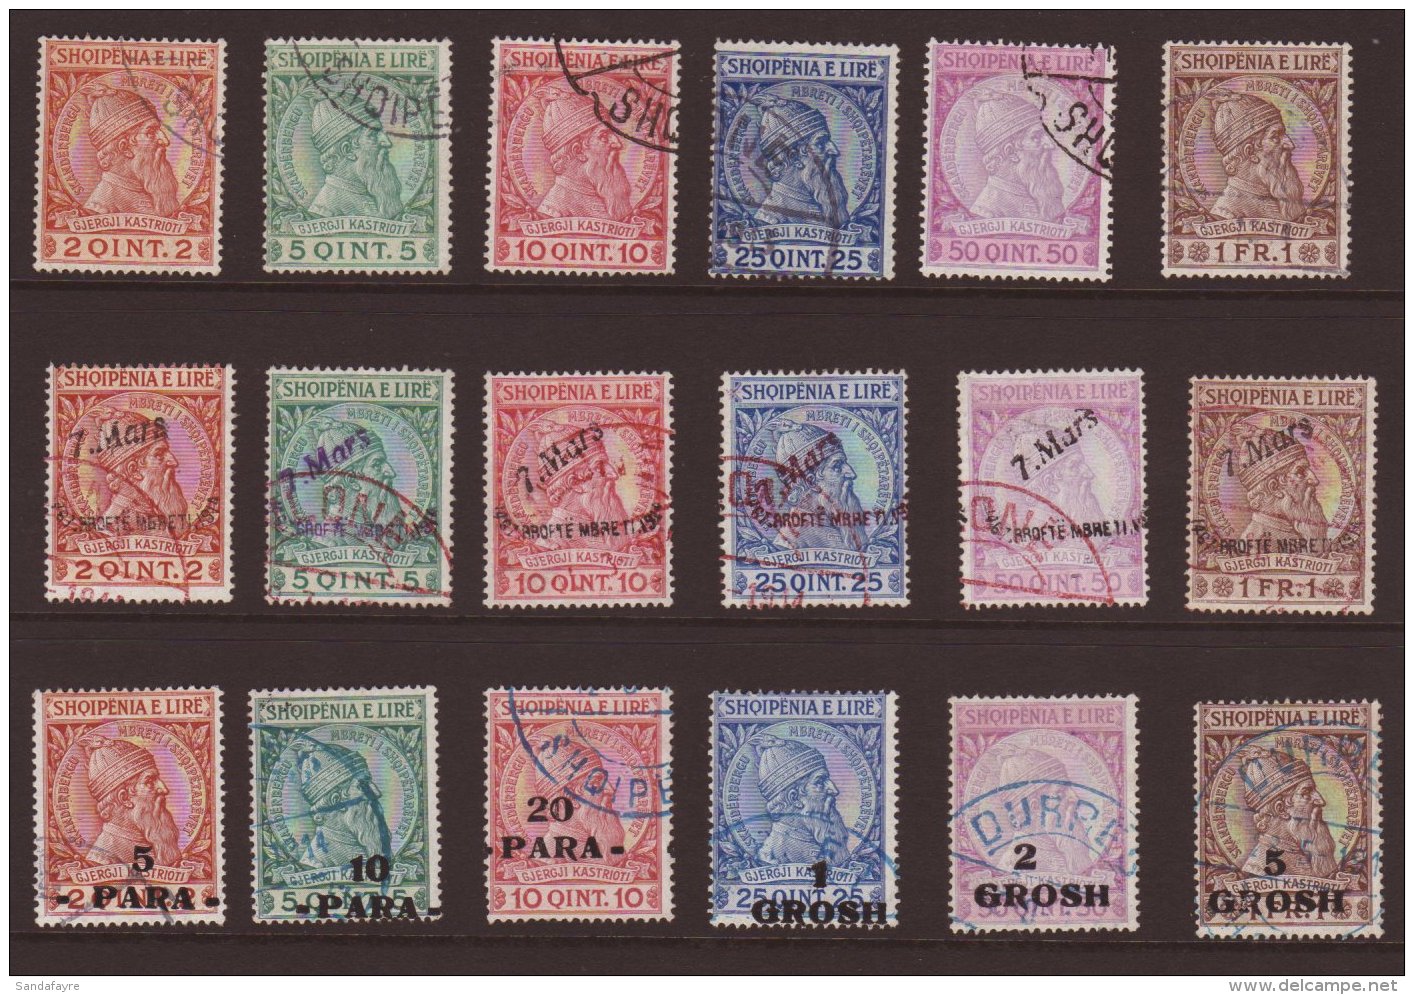 1913 - 1914 SKANDERBEG ISSUES Fine Used Selection Comprising 1913 Set, 1914 "7 Mars" Ovpt Set, 1914 Surcharge Set,... - Albanie